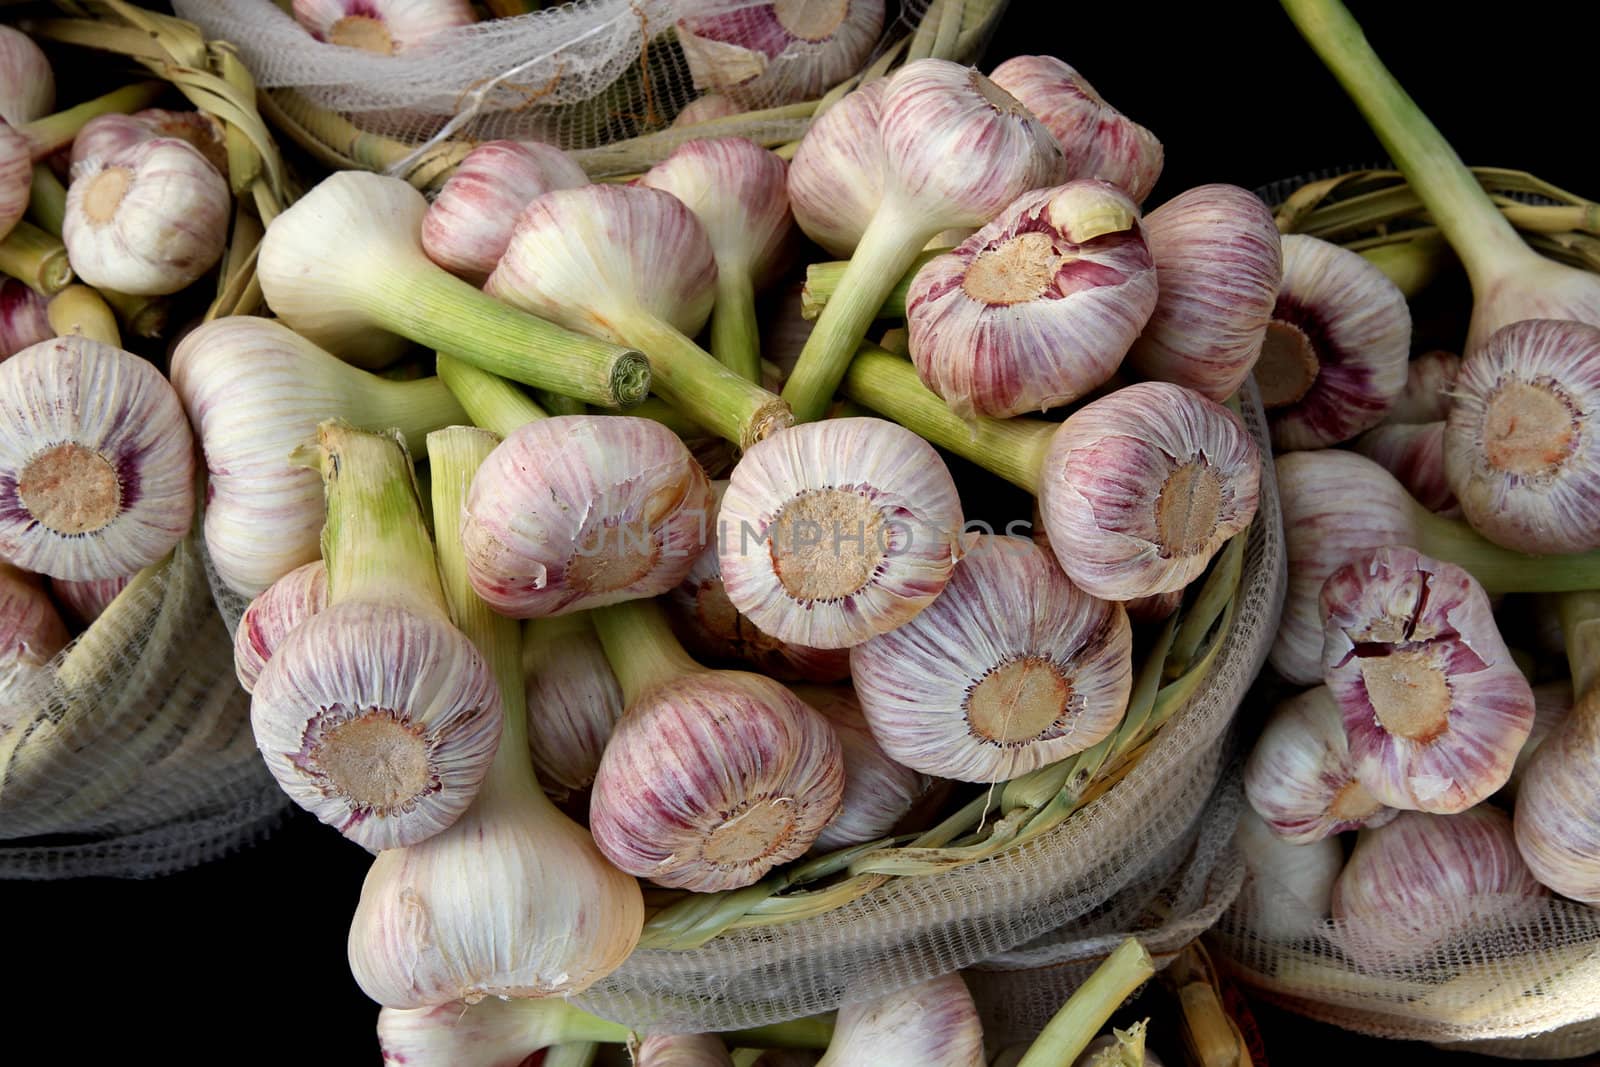 fresch garlic from the farm as nice food background